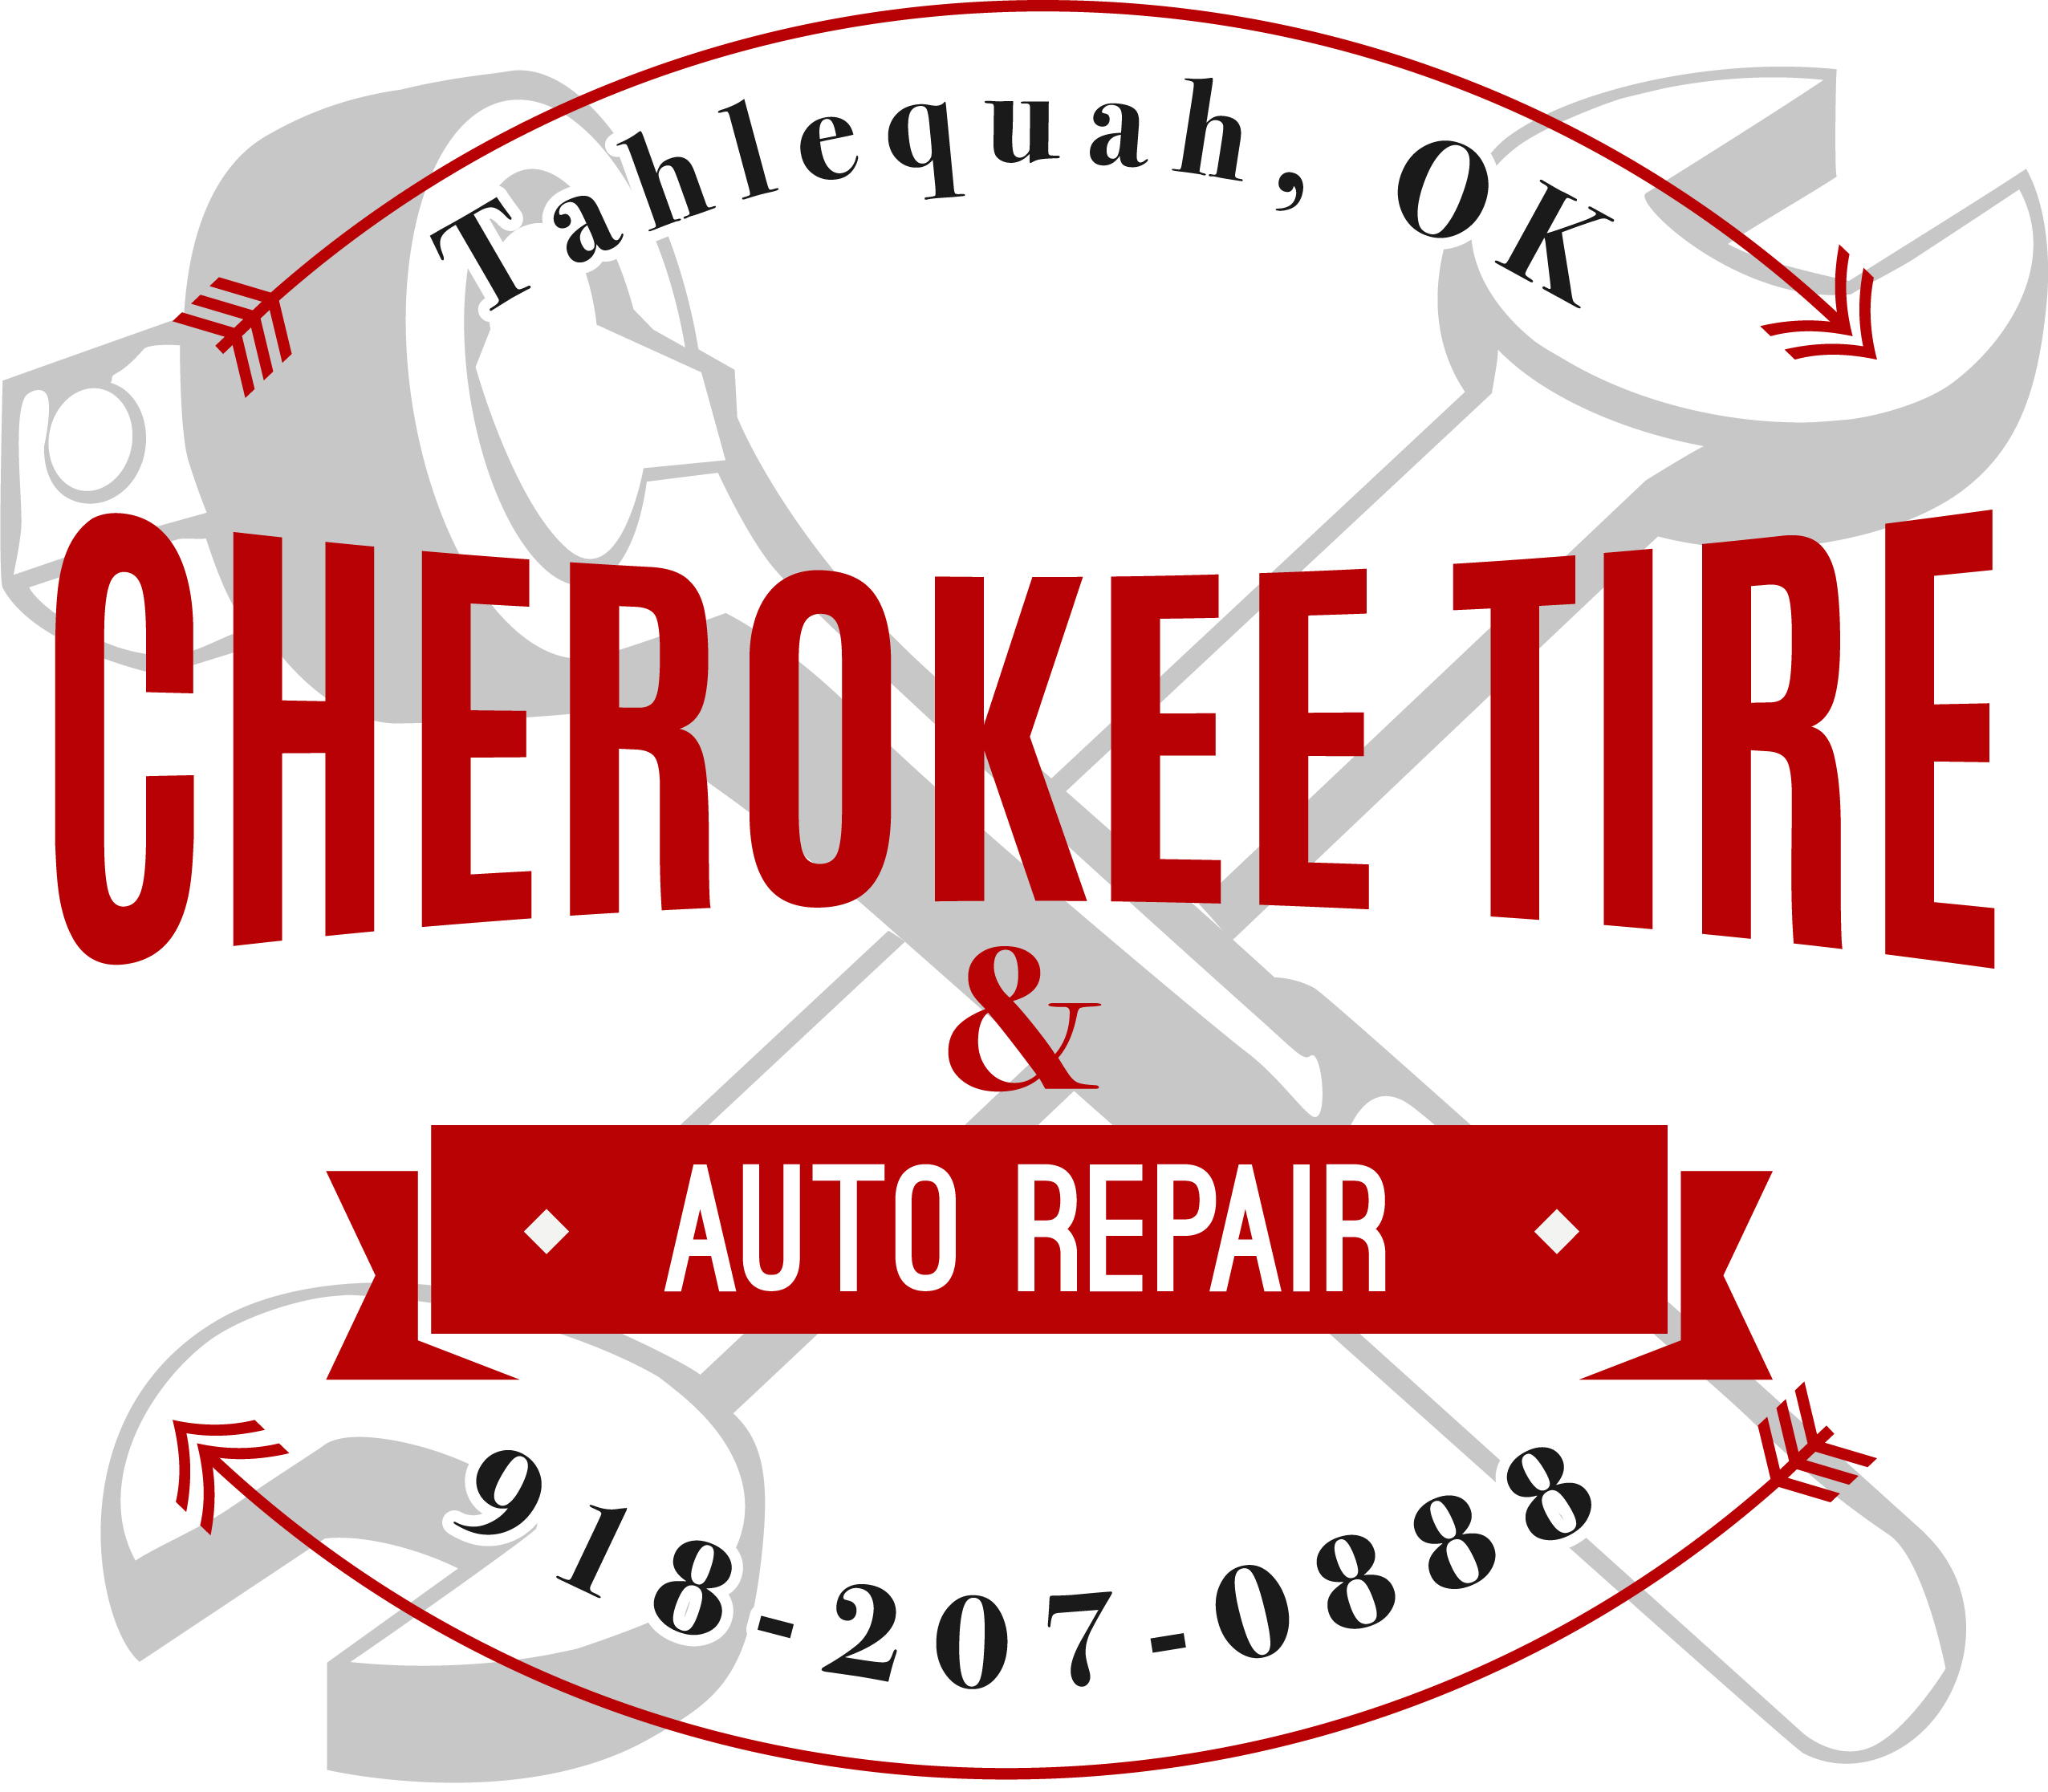 Cherokee Tire & Auto Repair